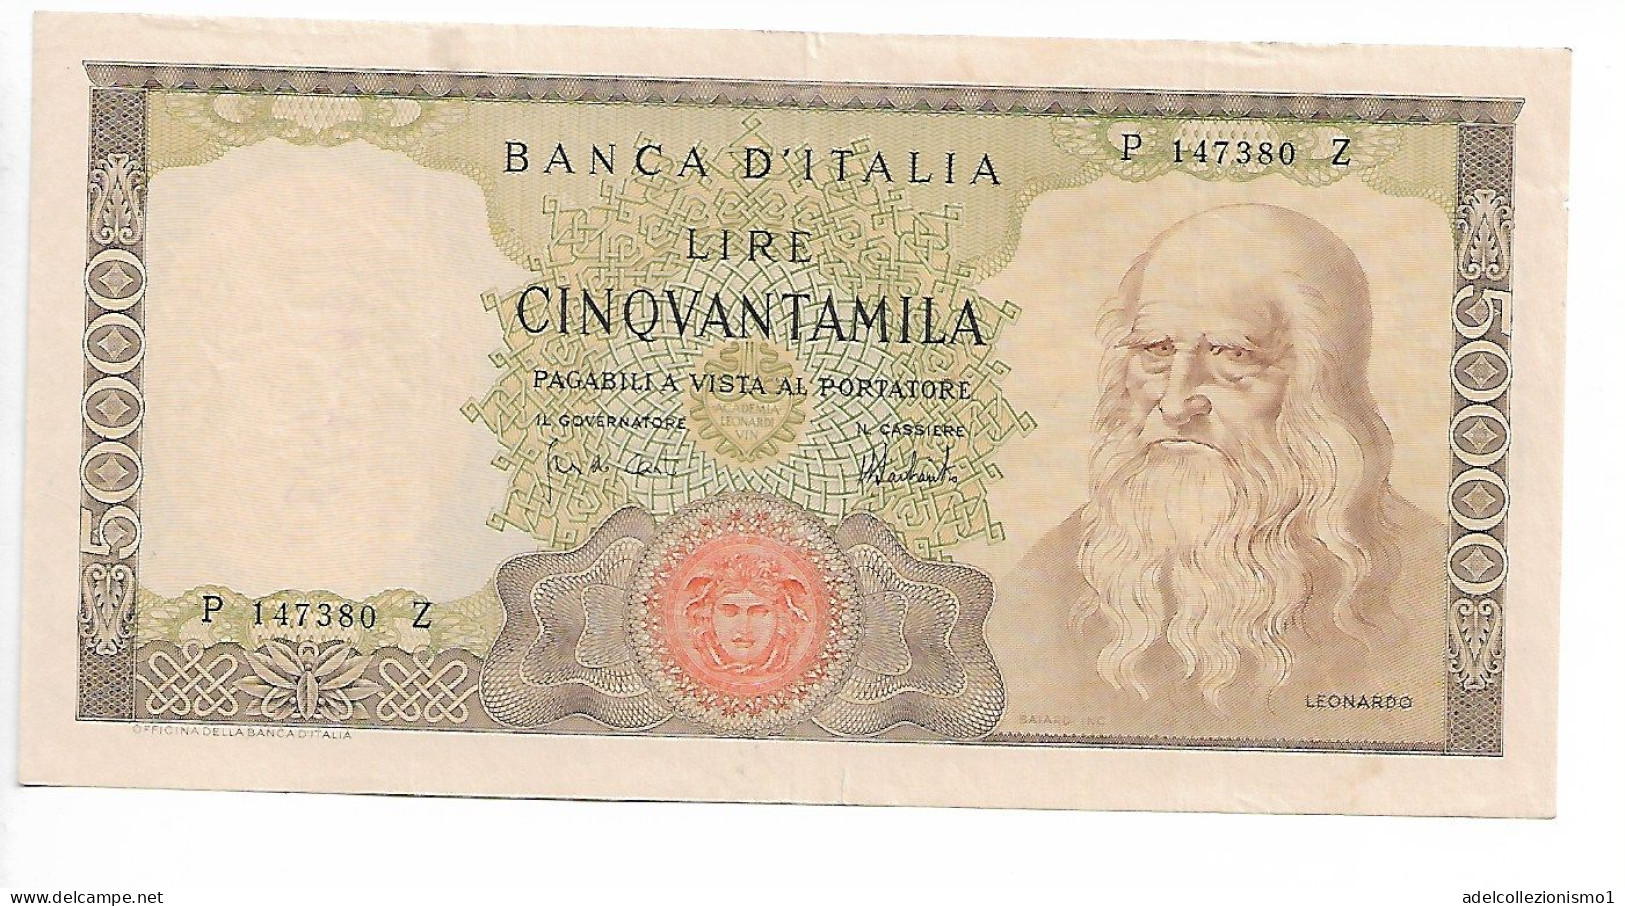 49487) BANCONOTA DA 50000 LIRE BANCA D'ITALIA LEONARDO DA VINCI 4/2/1974 - 50000 Lire